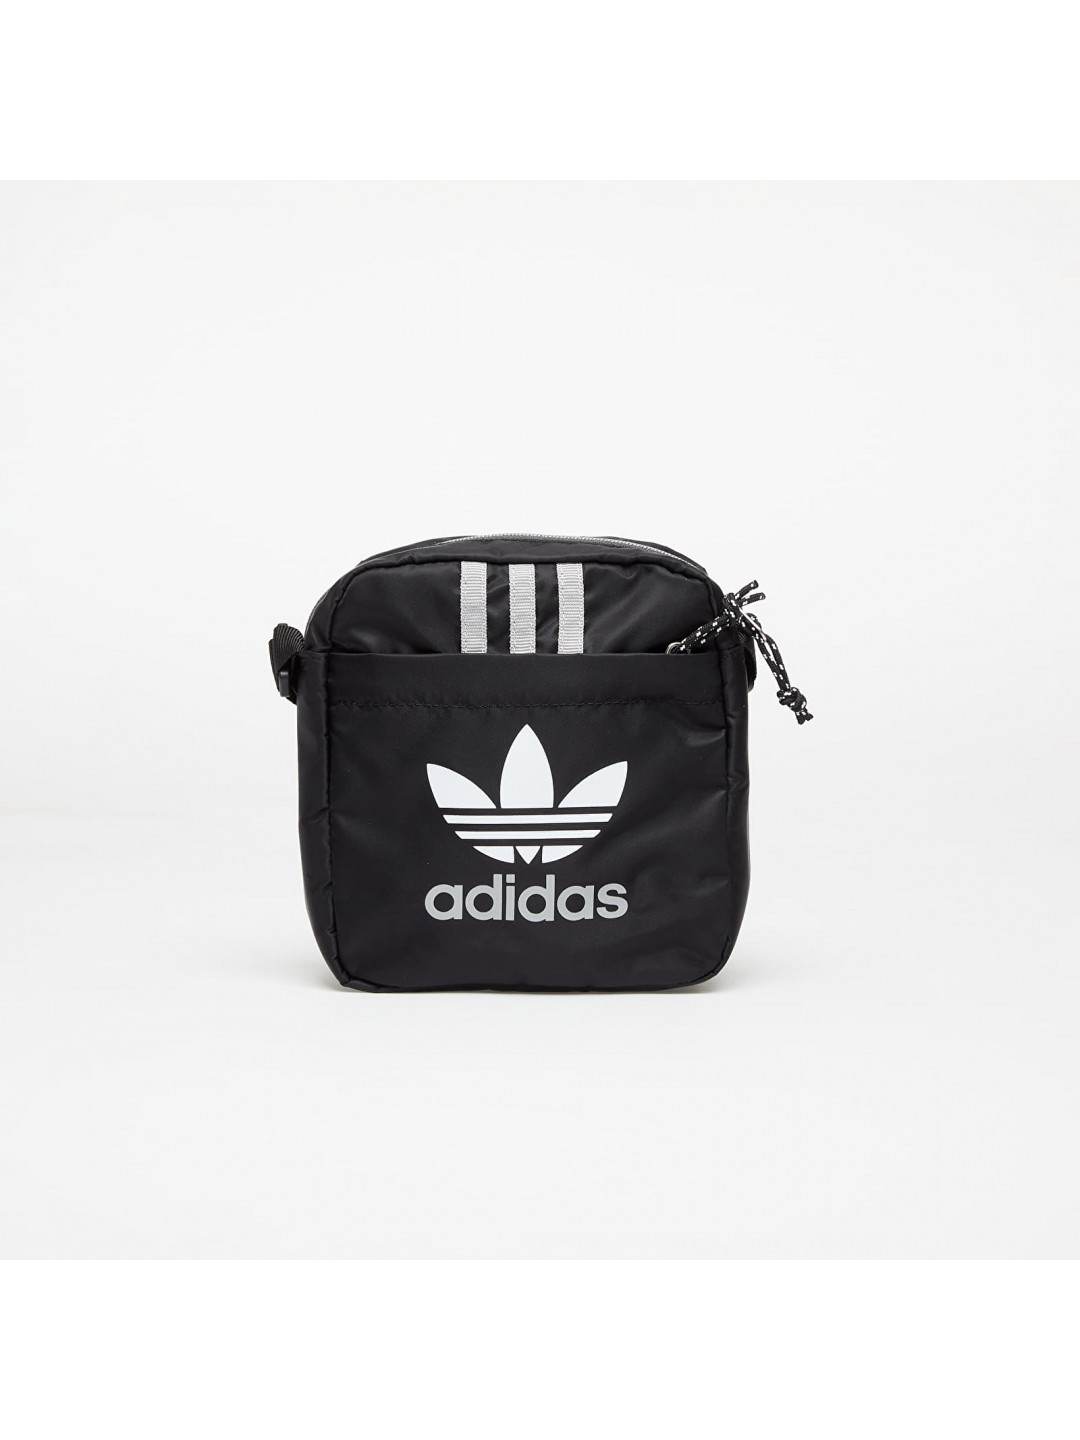 Adidas Ac Festival Bag Black